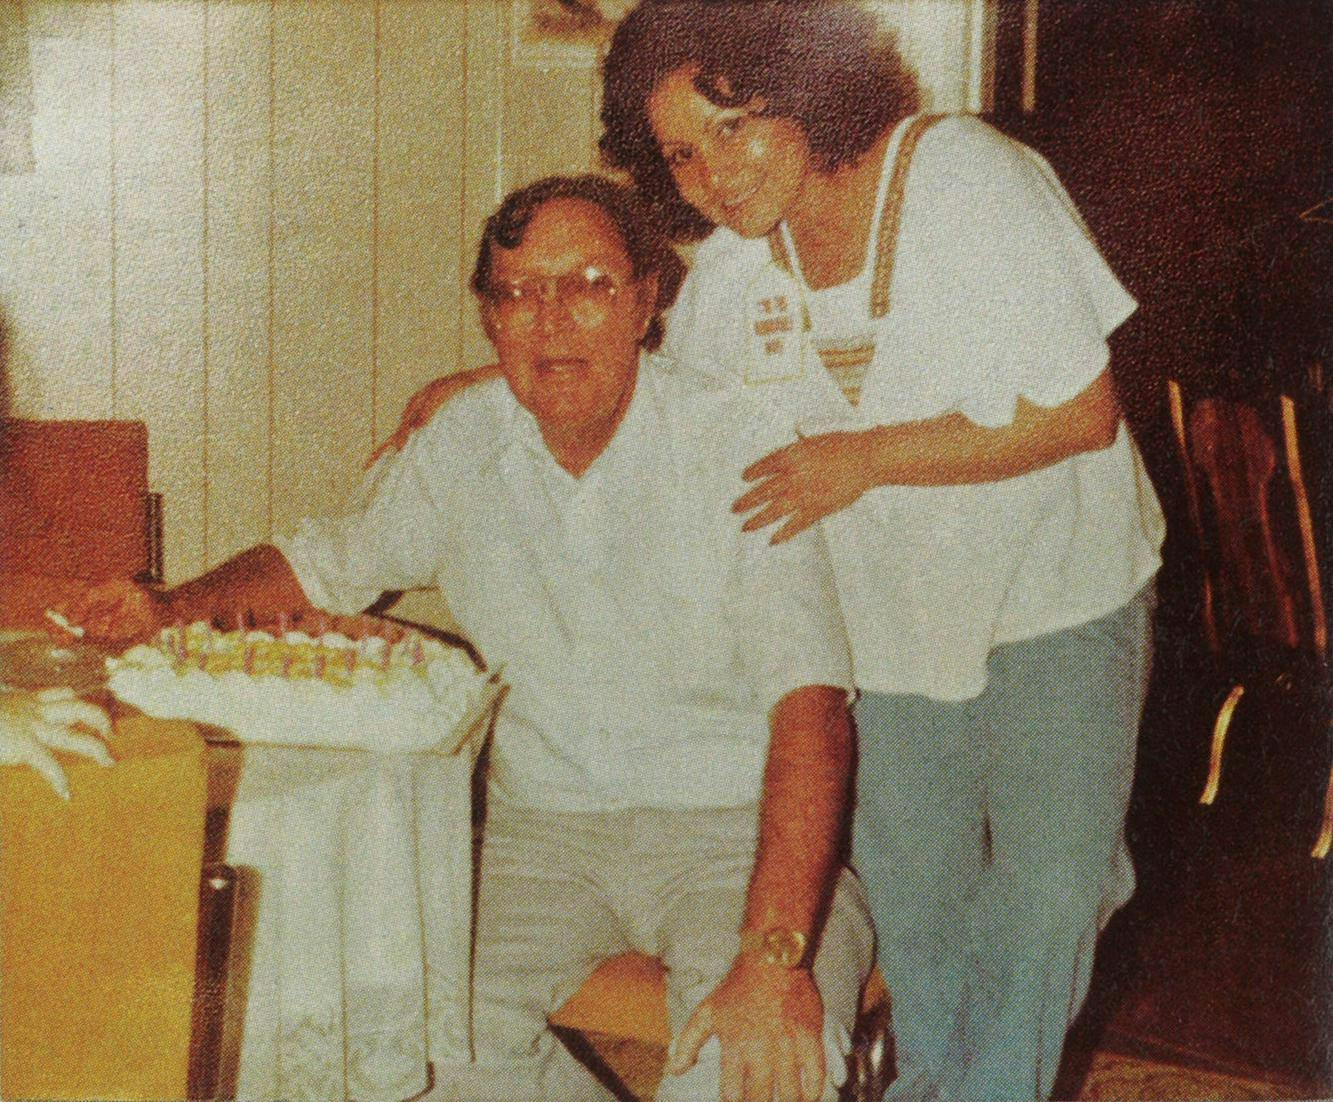 Bill Haley and Martha celebrate their wedding in Harlingen in 1980.